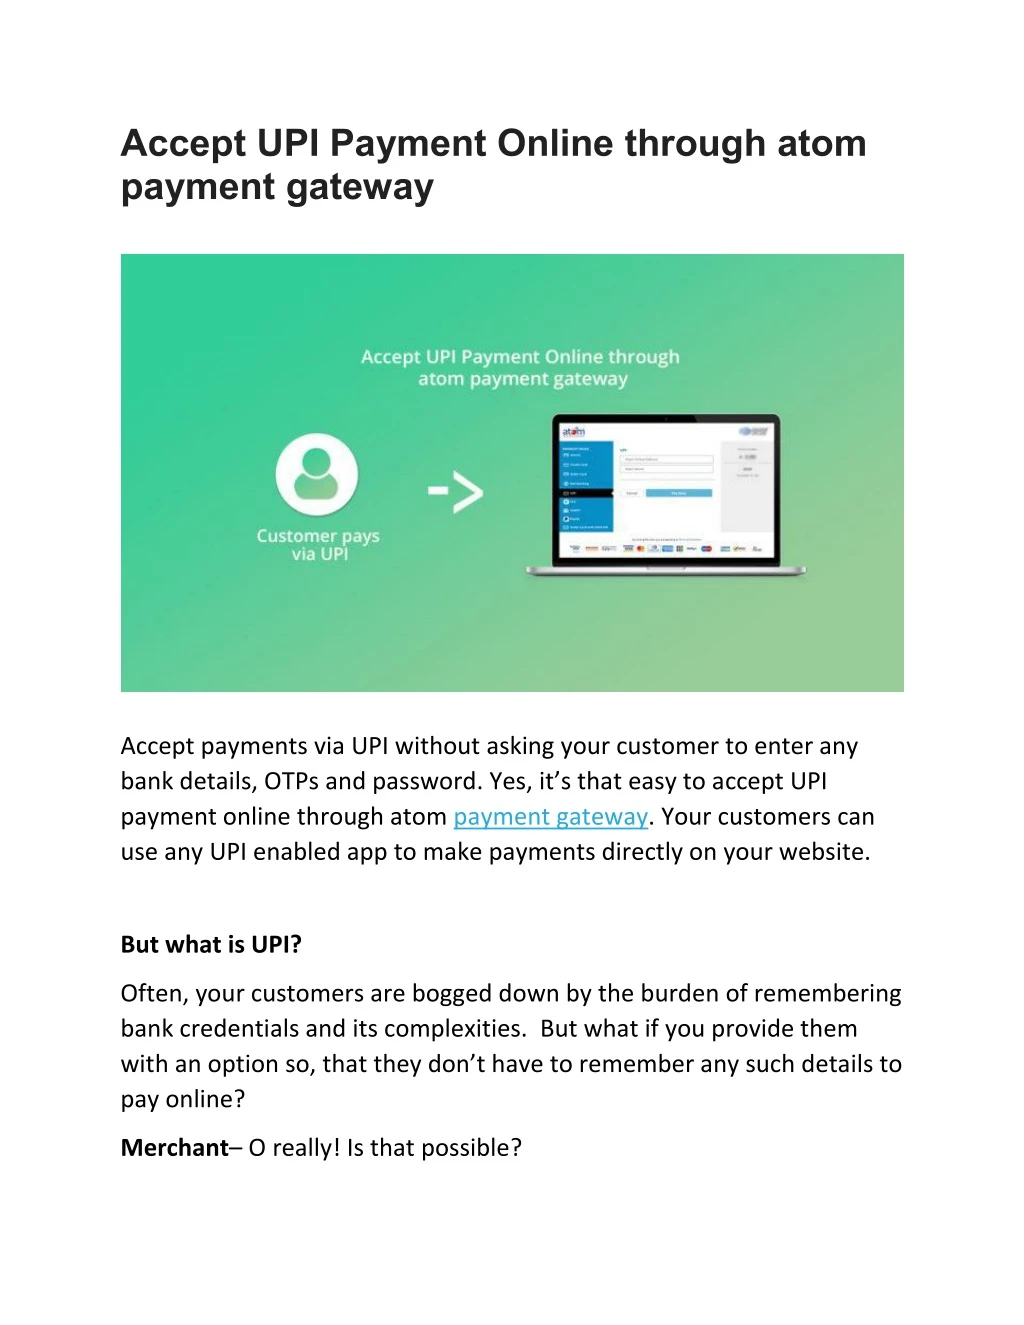 accept upi payment online through atom payment